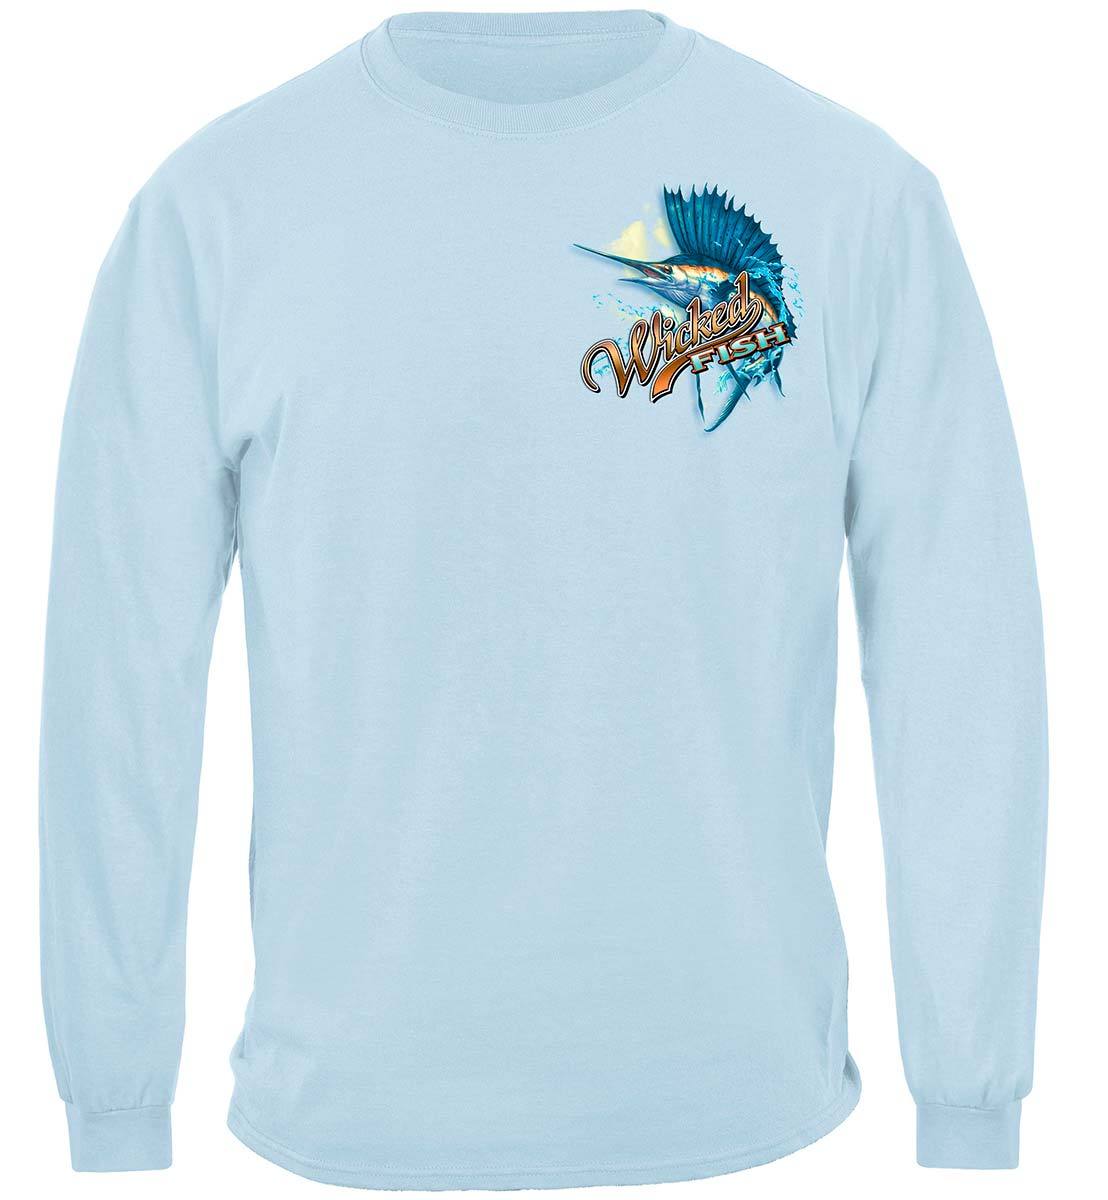 Wicked Fish Marlin Premium T-Shirt - Shop Erazor Bits